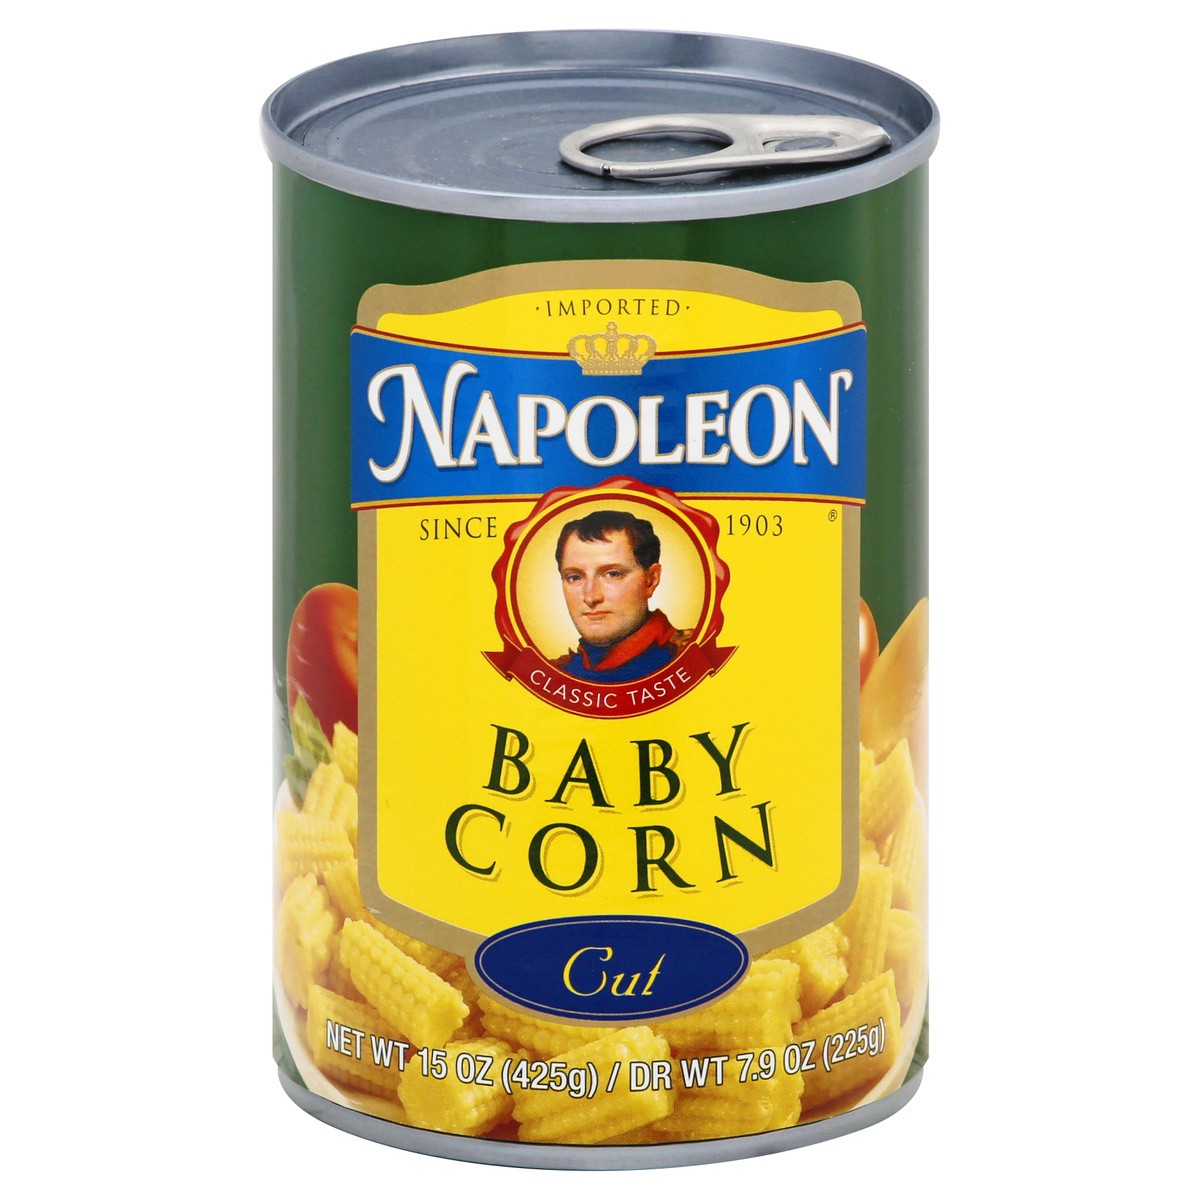 slide 1 of 9, Napoleon Cut Baby Corn 15 oz, 15 oz